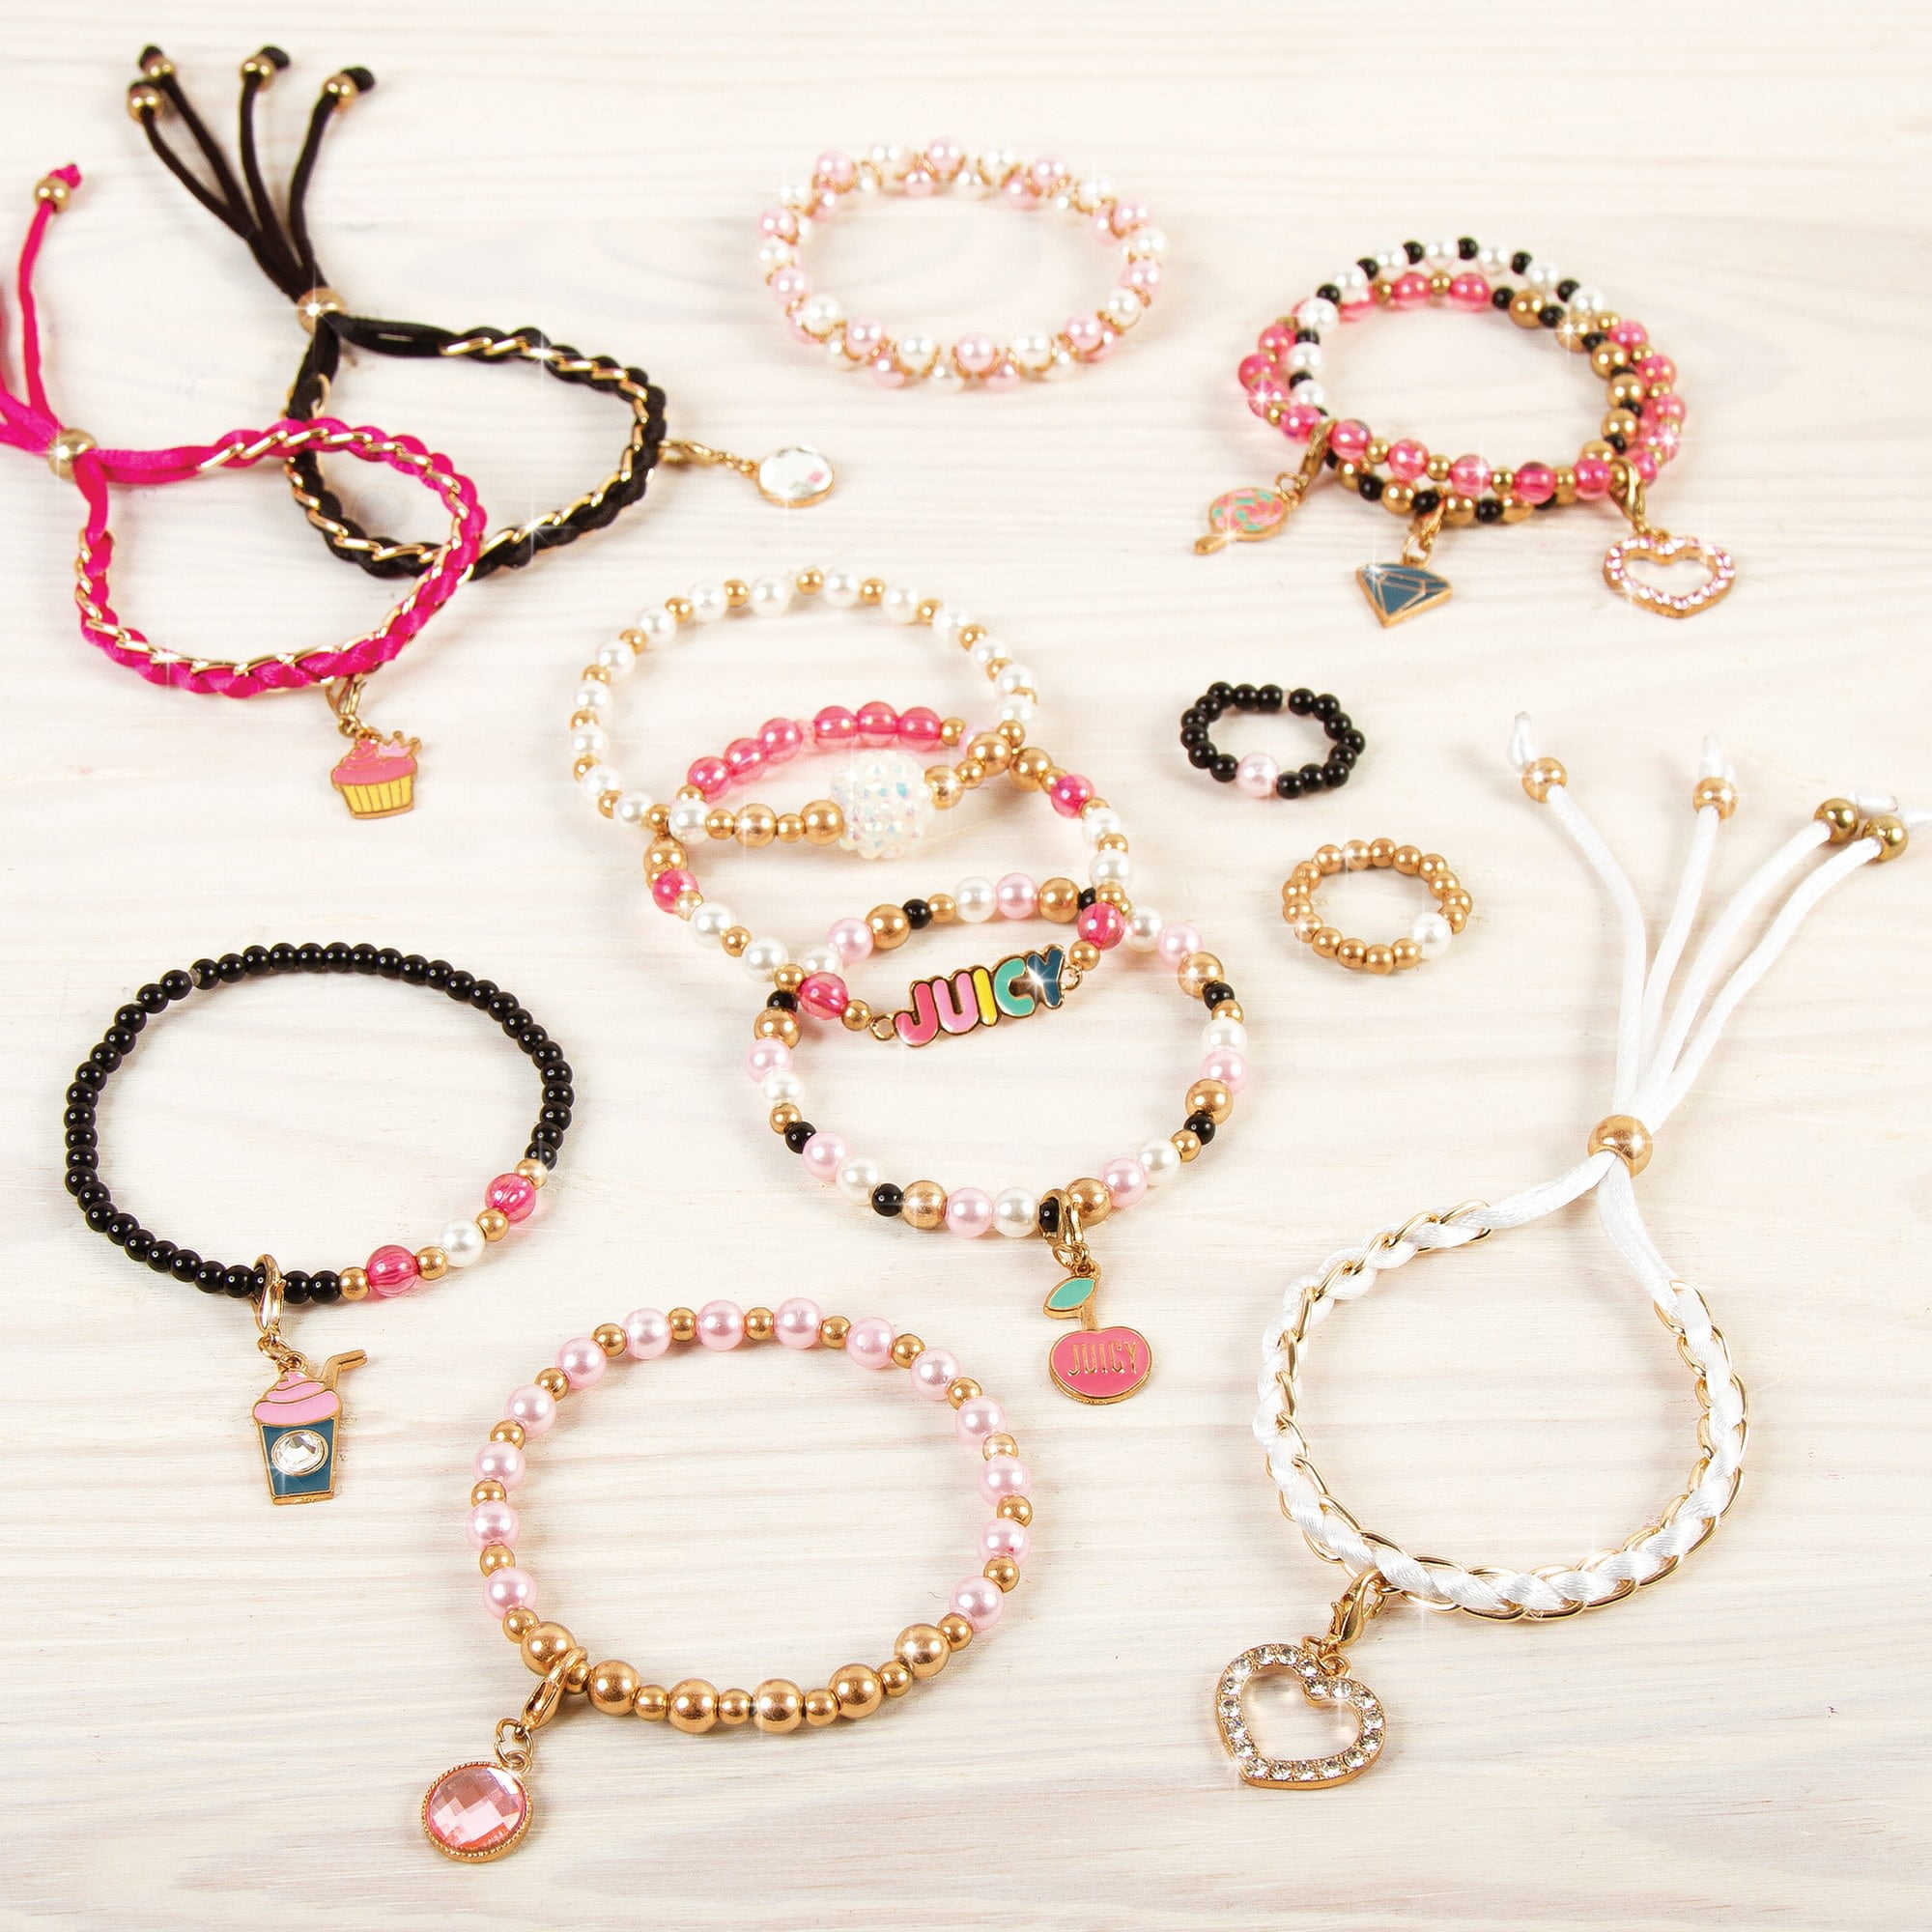 Juicy Couture Make it Real Pink & Precious Bracelet Kit, 190 PCS